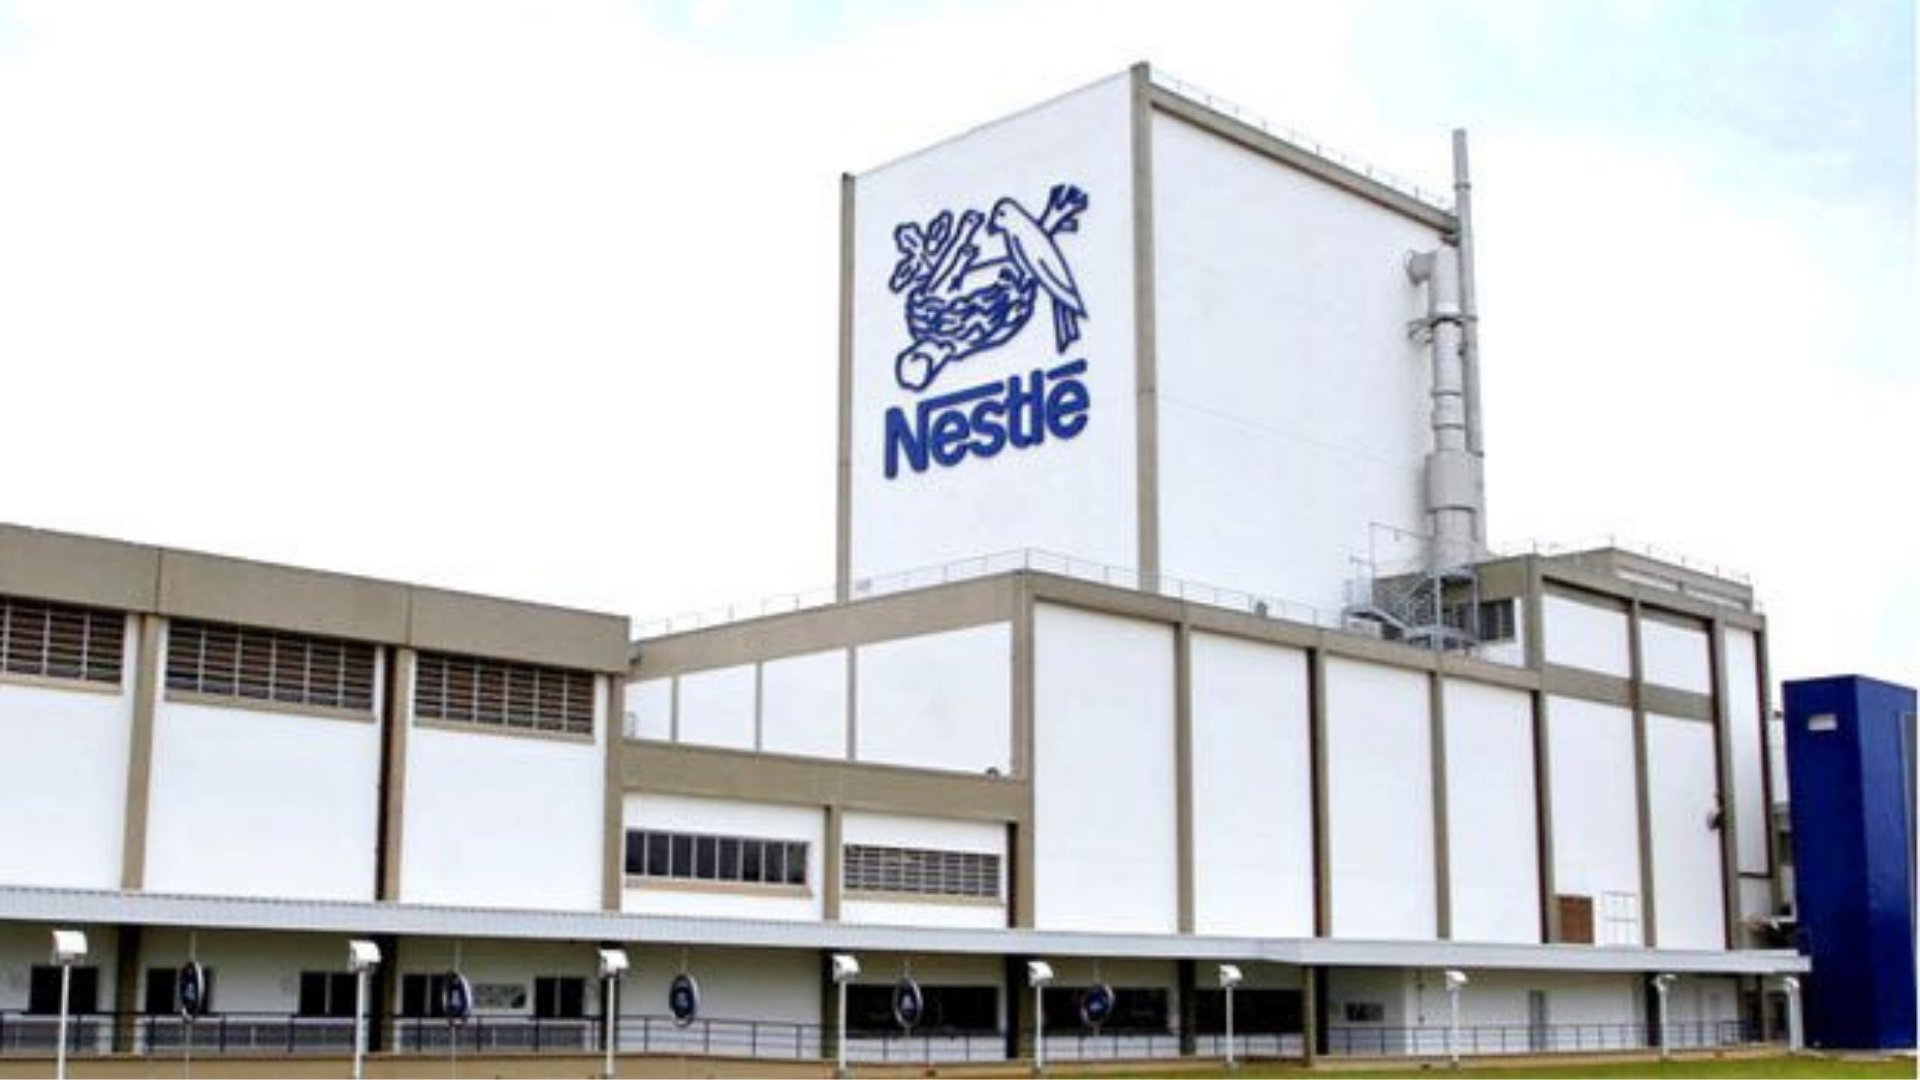 Nestlé - vacancies - employment